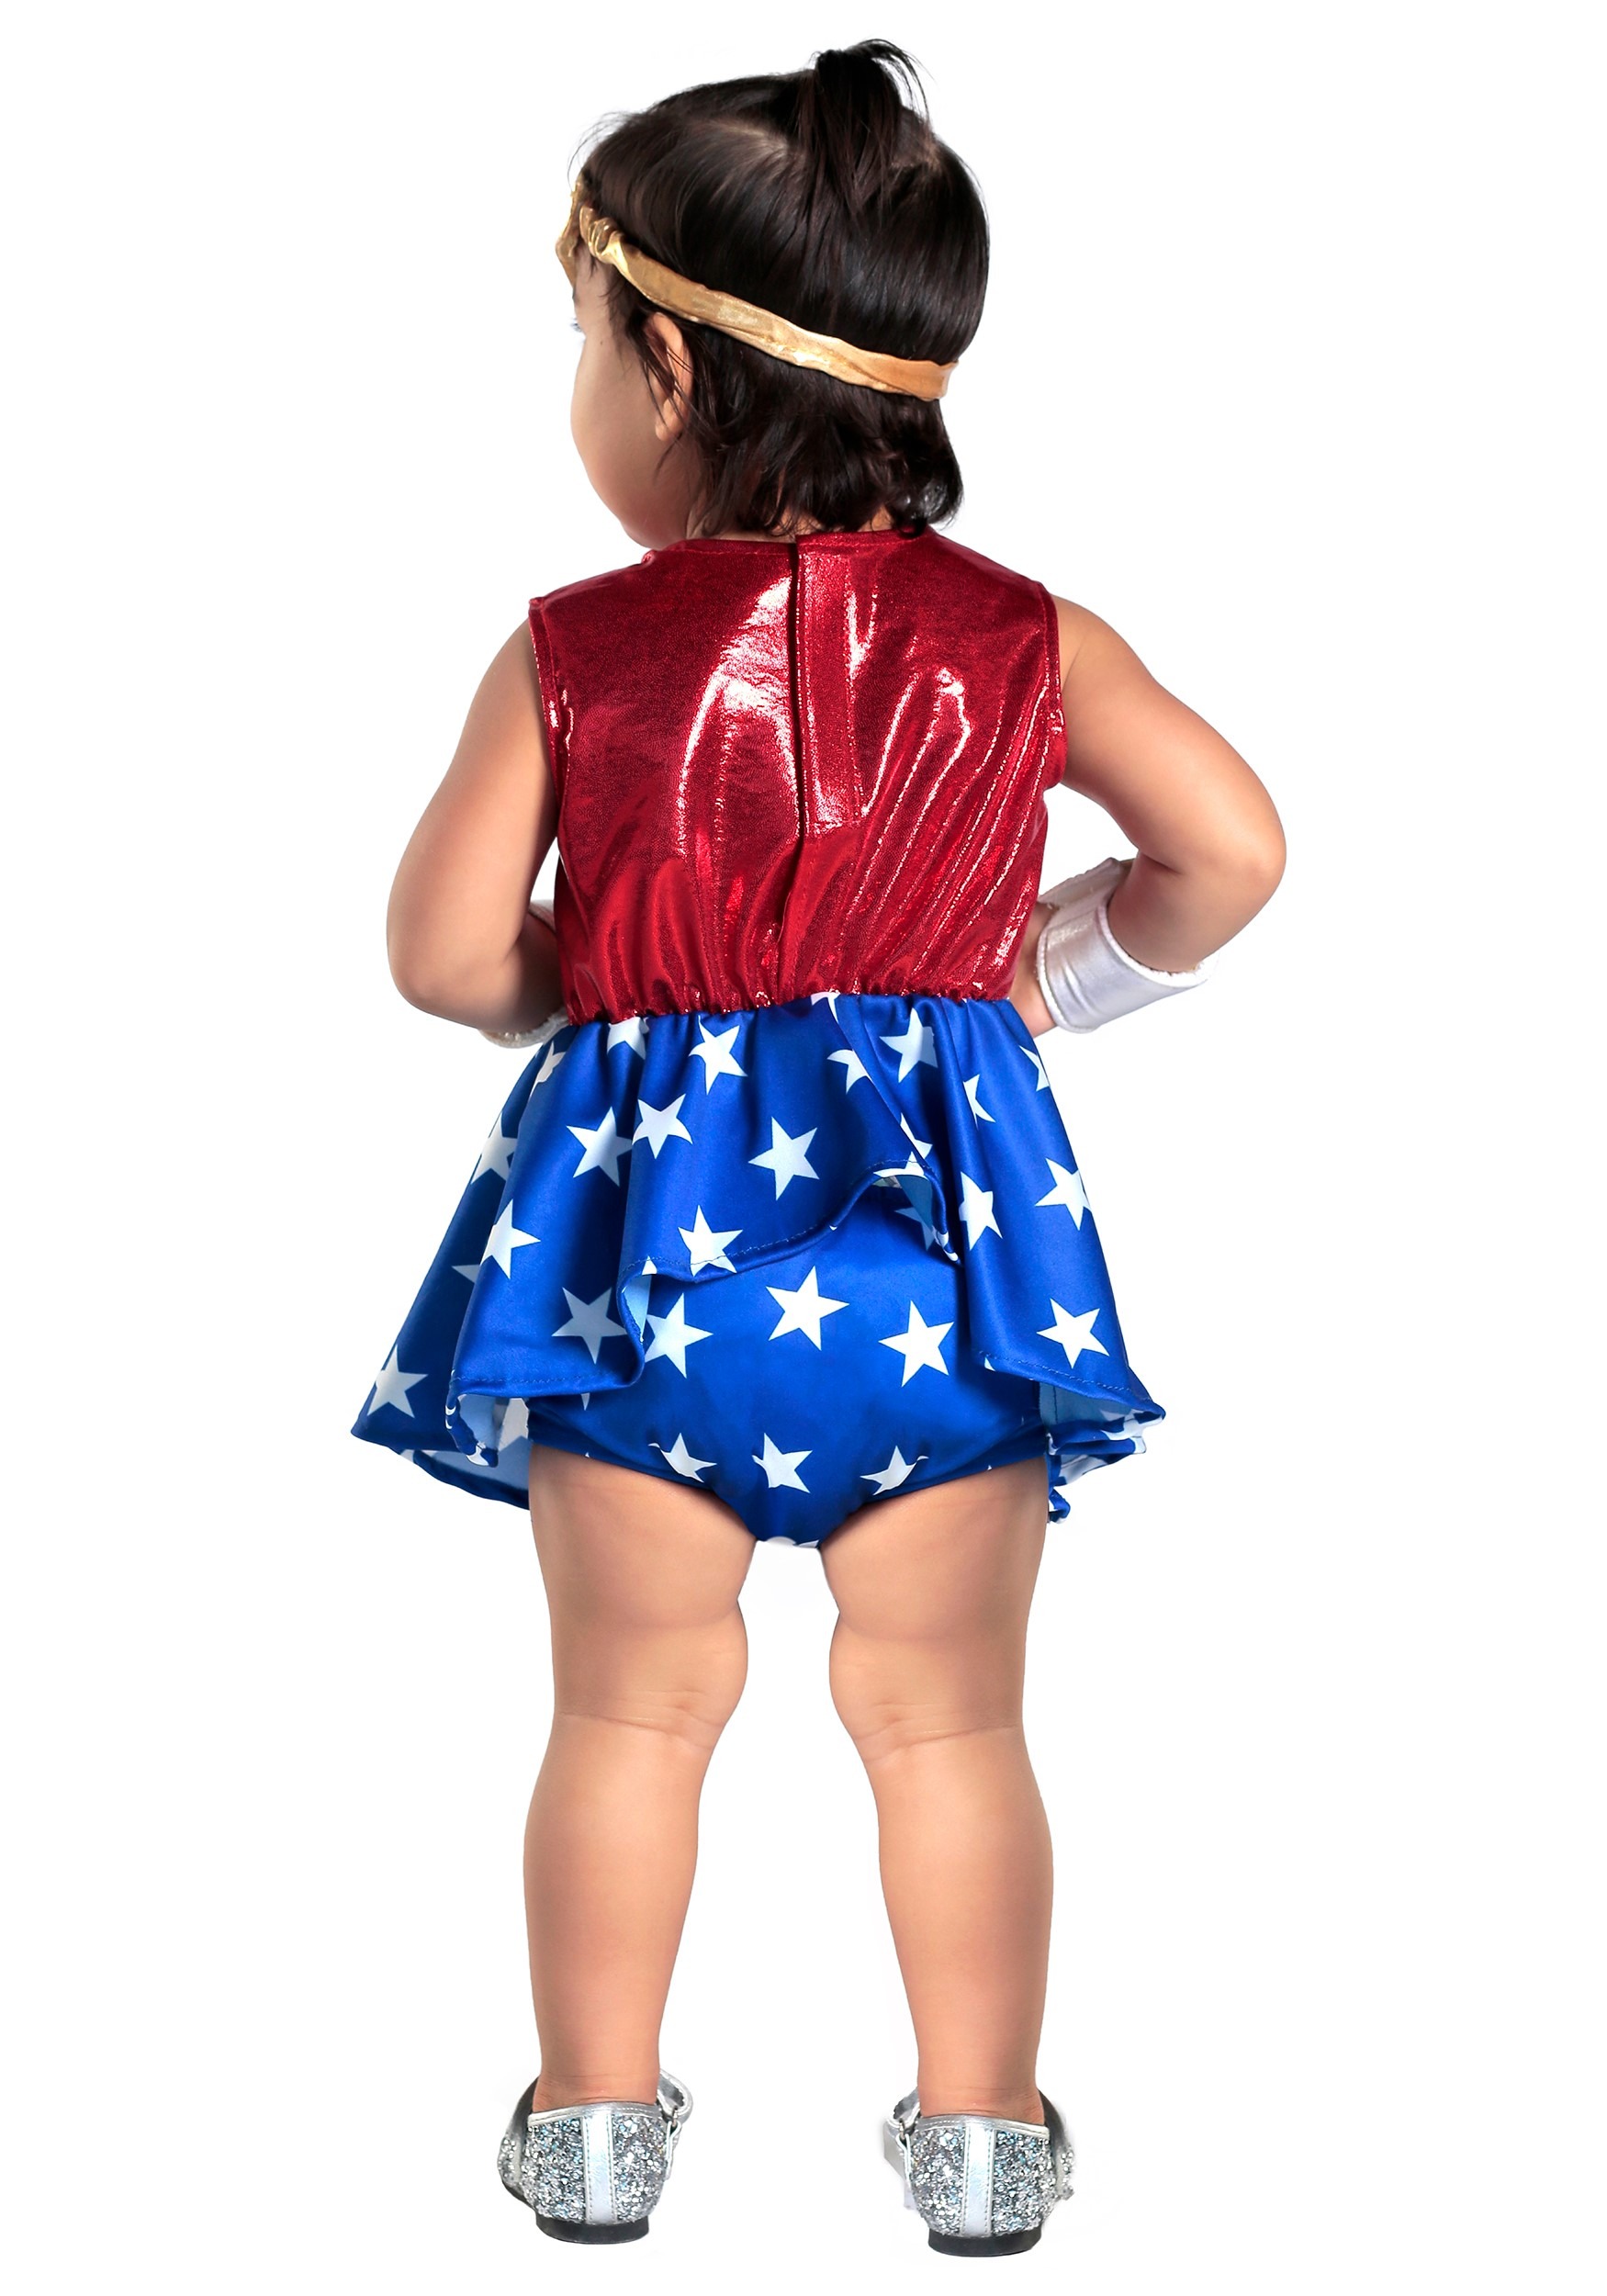 Toddler Wonder Woman Costume Dress